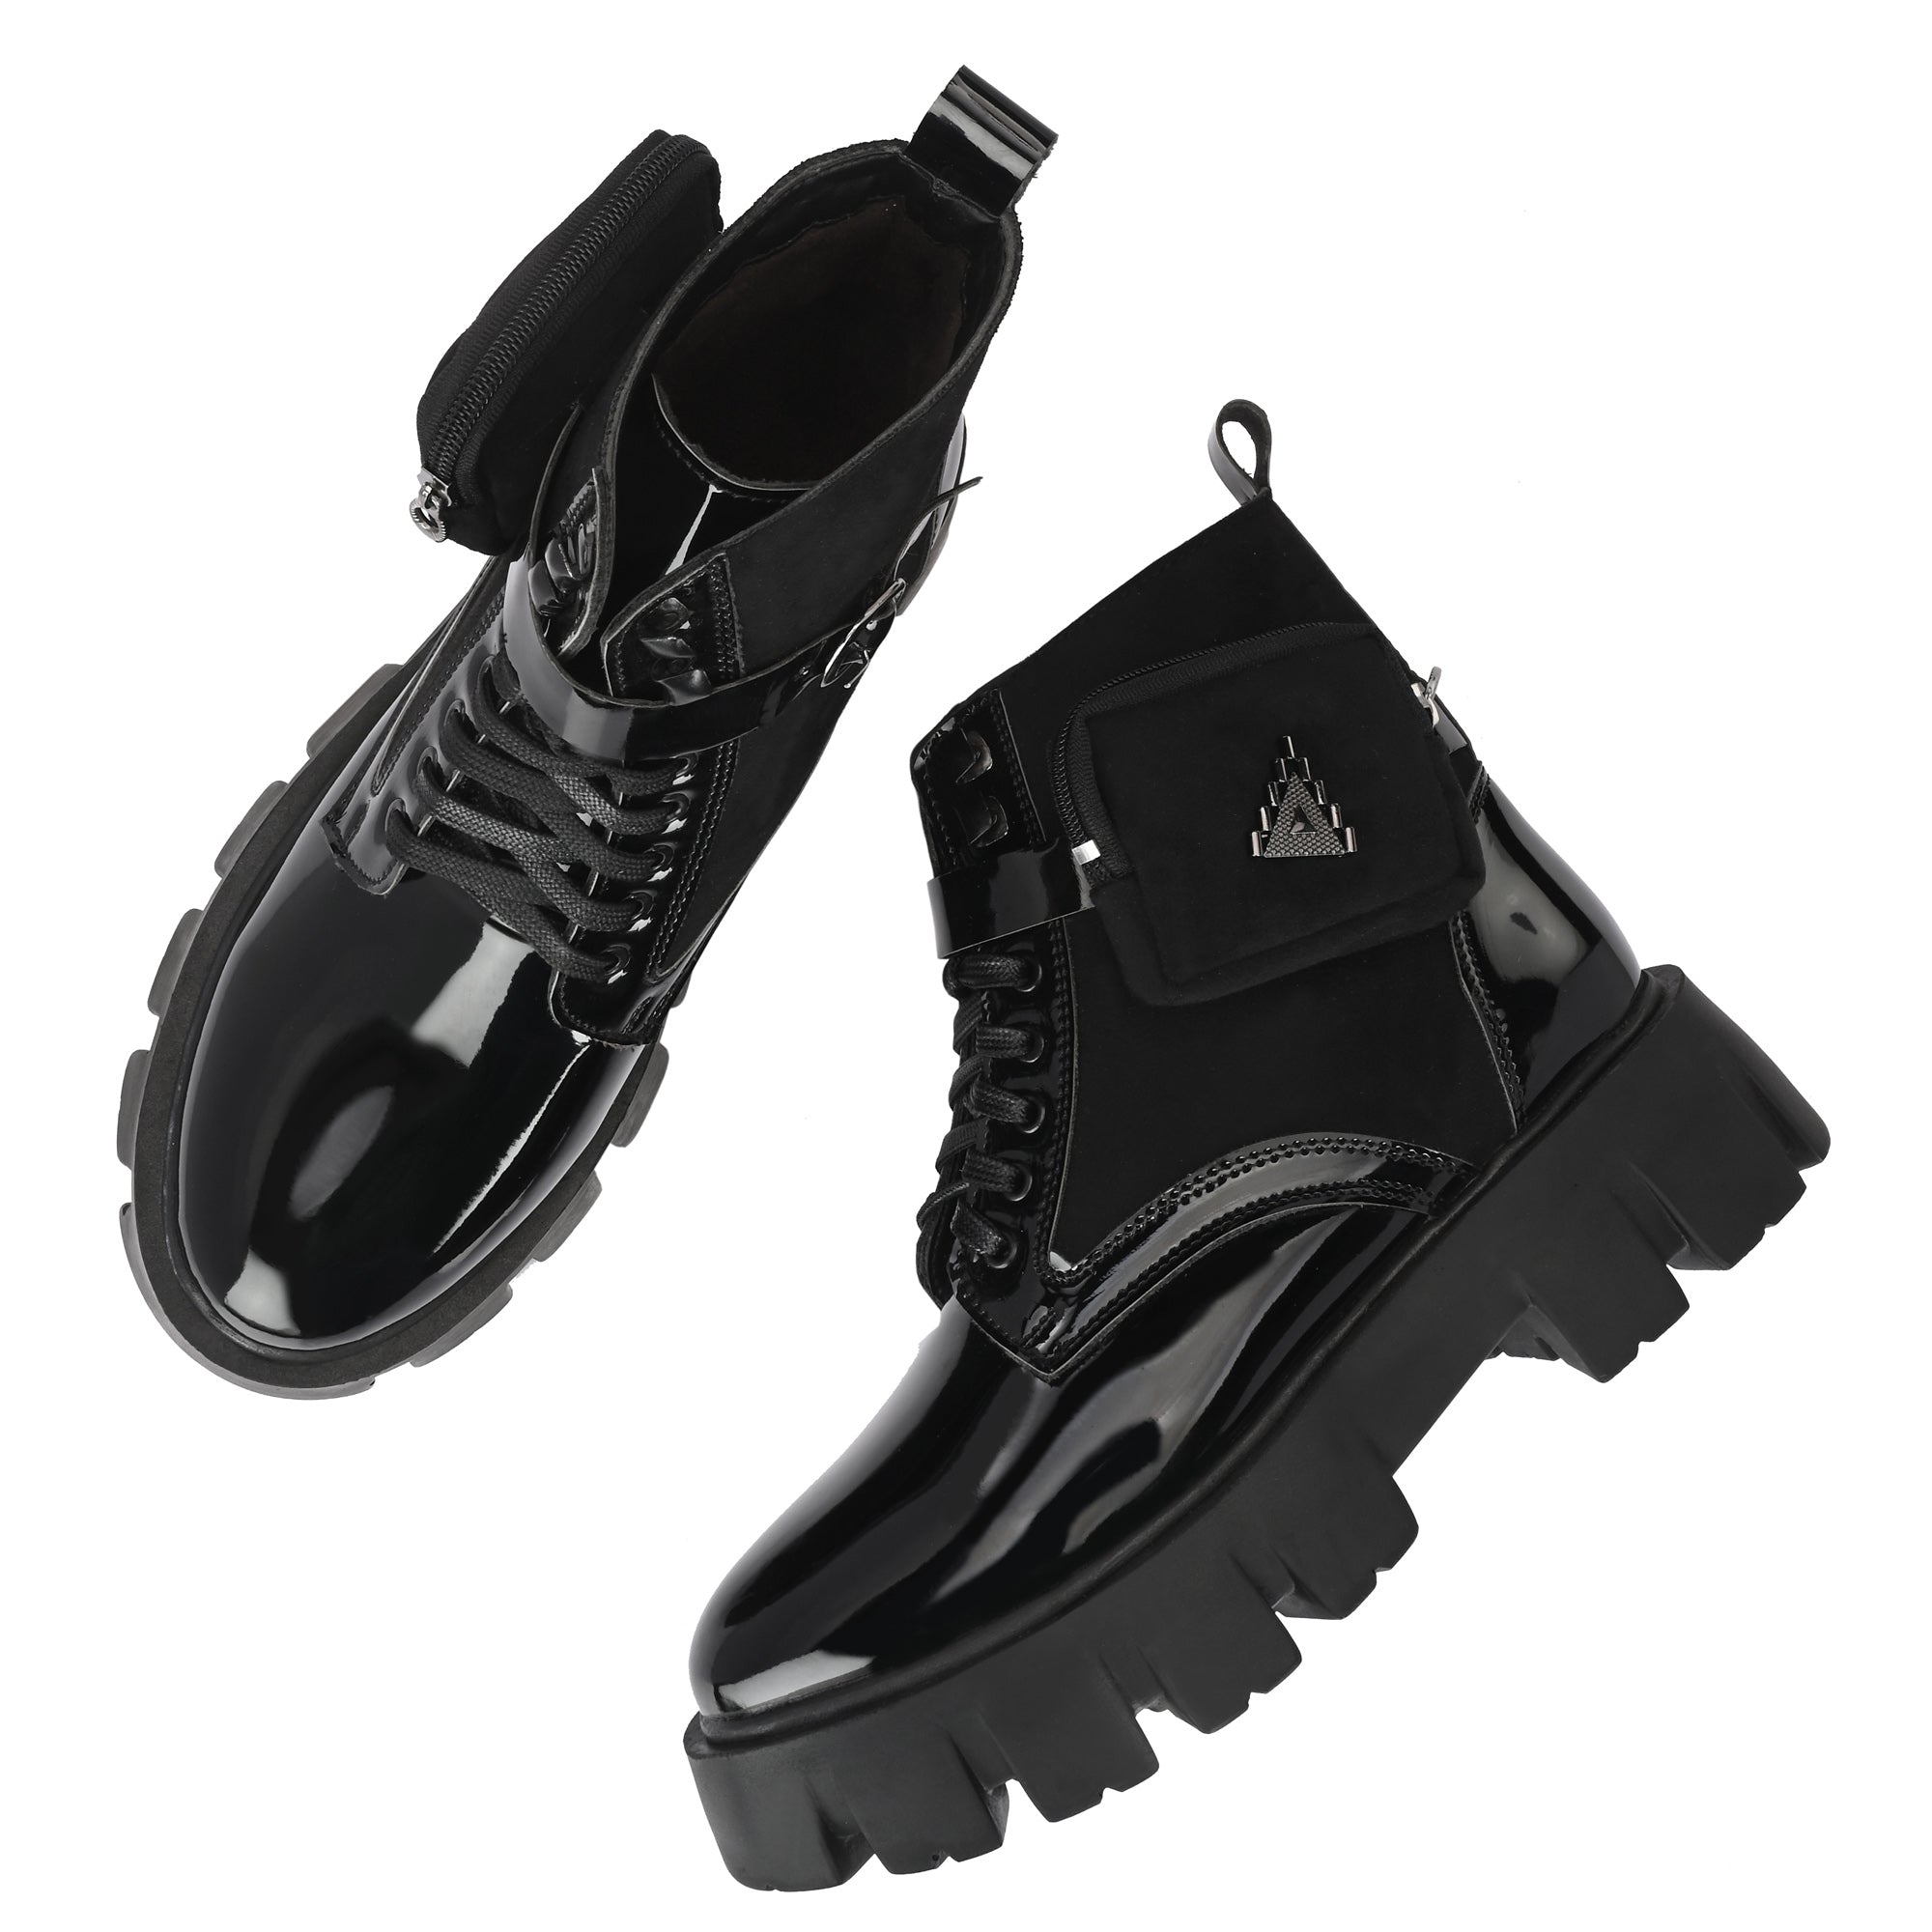 attitudist-black-velvet-upper-high-heel-pocket-boots-for-men